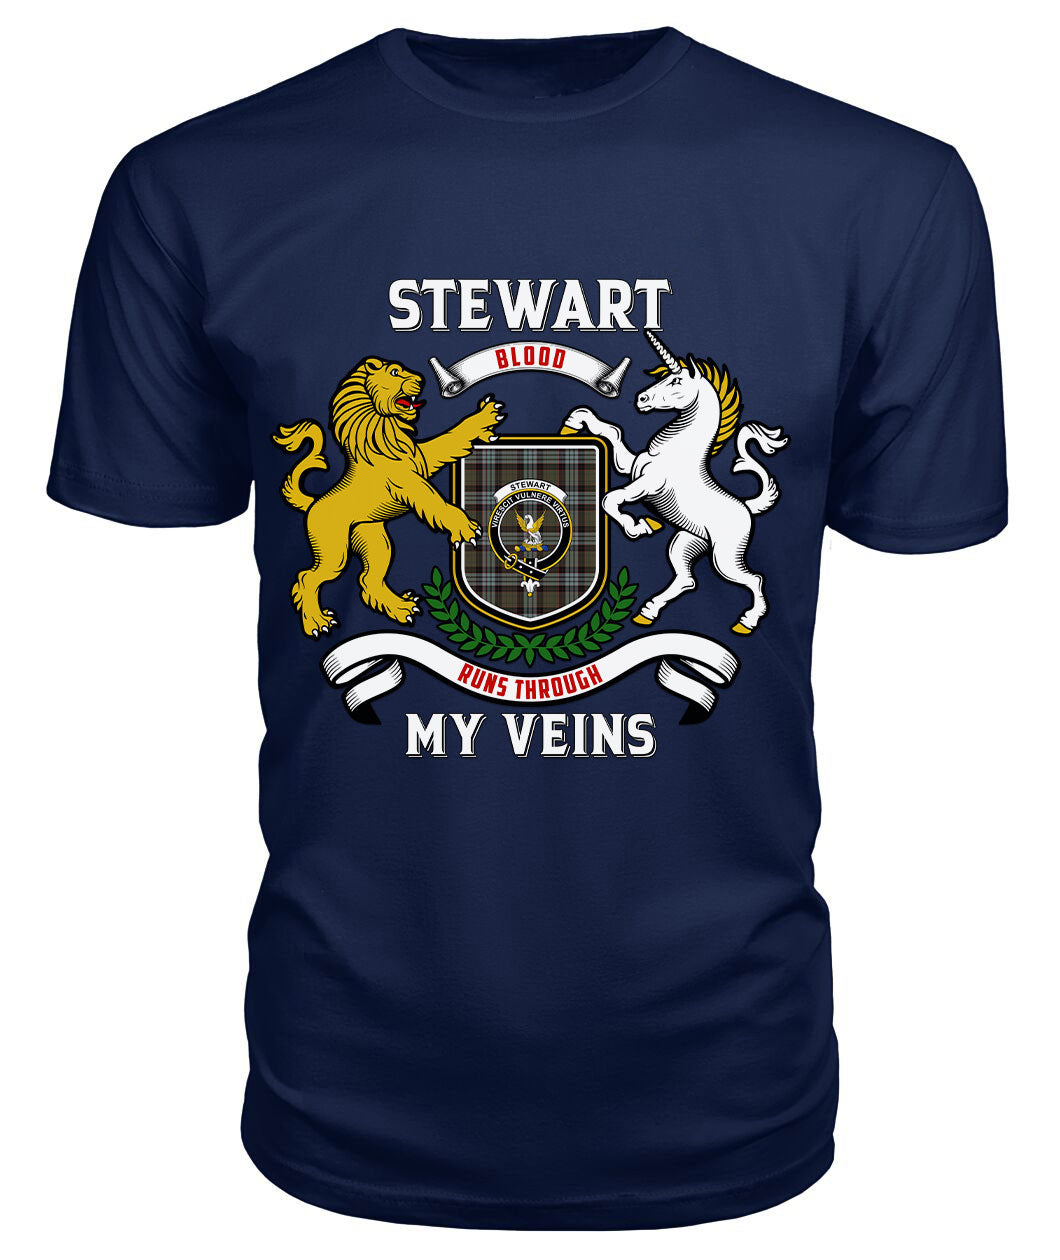 Stewart Old Weathered Tartan Crest 2D T-shirt - Blood Runs Through My Veins Style